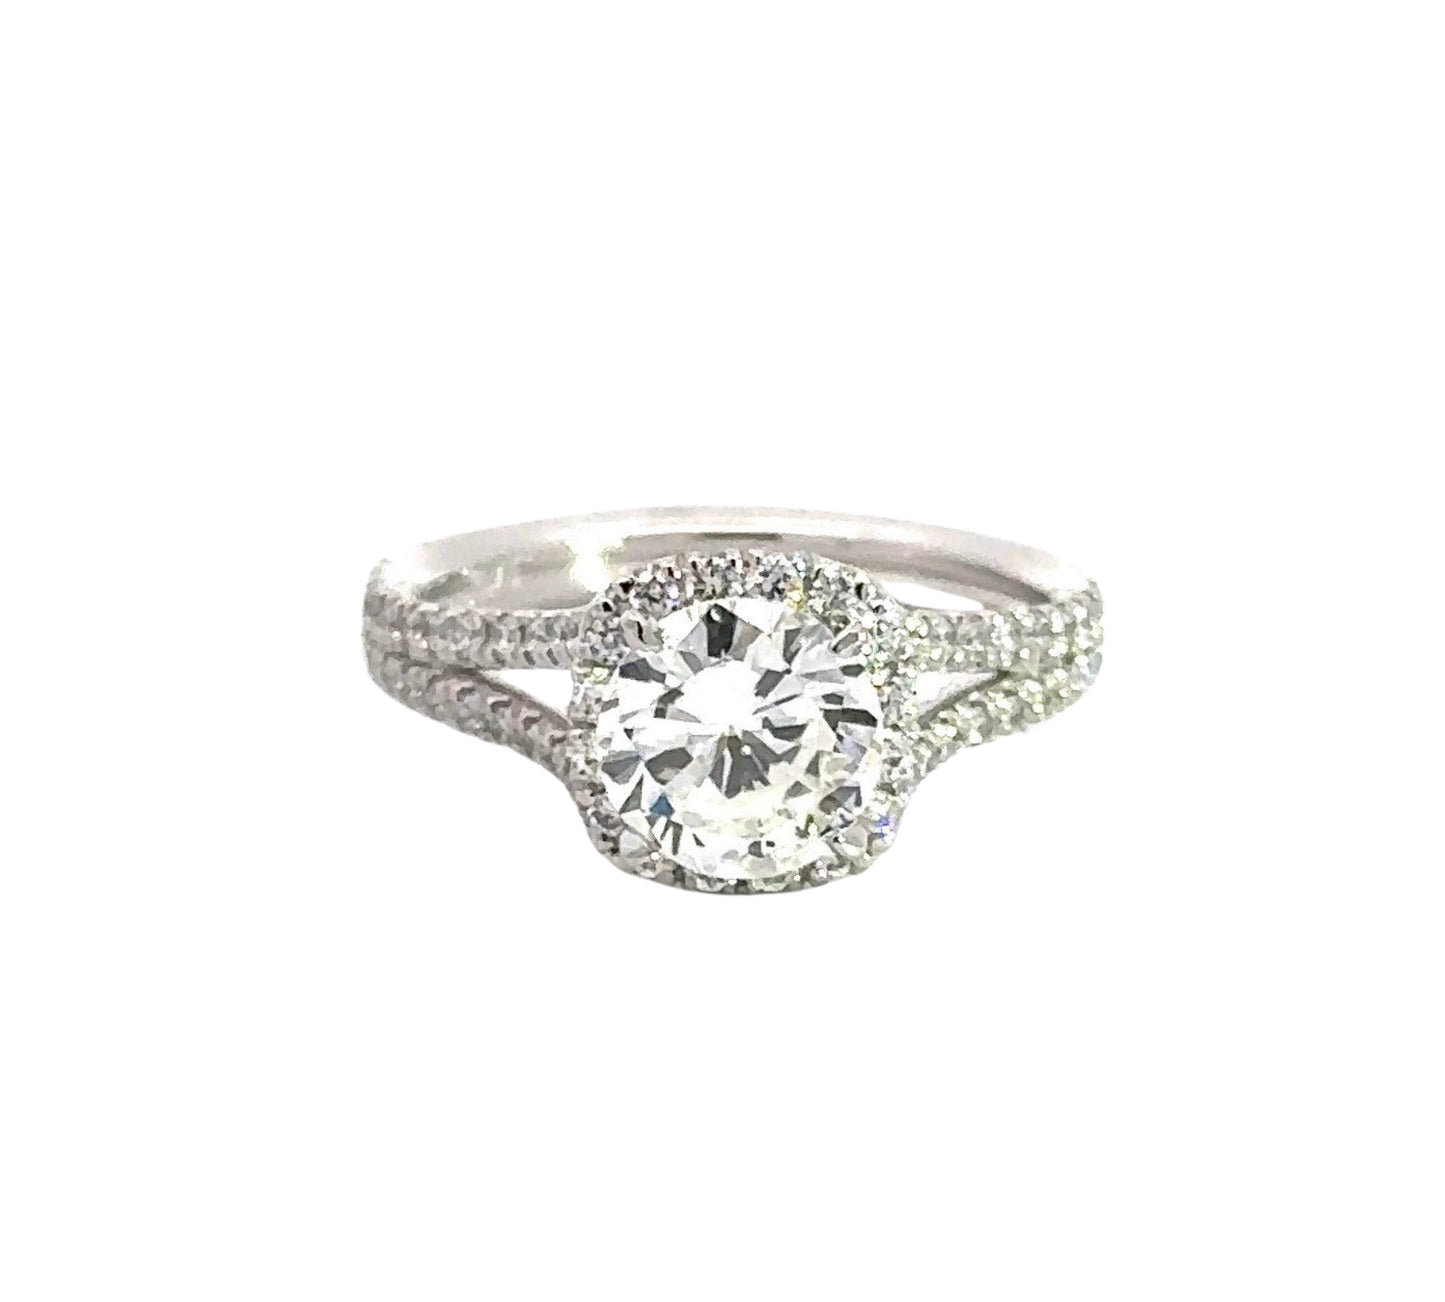 platinum diamond ring with 1.42 carat center stone and diamonds around the center and band